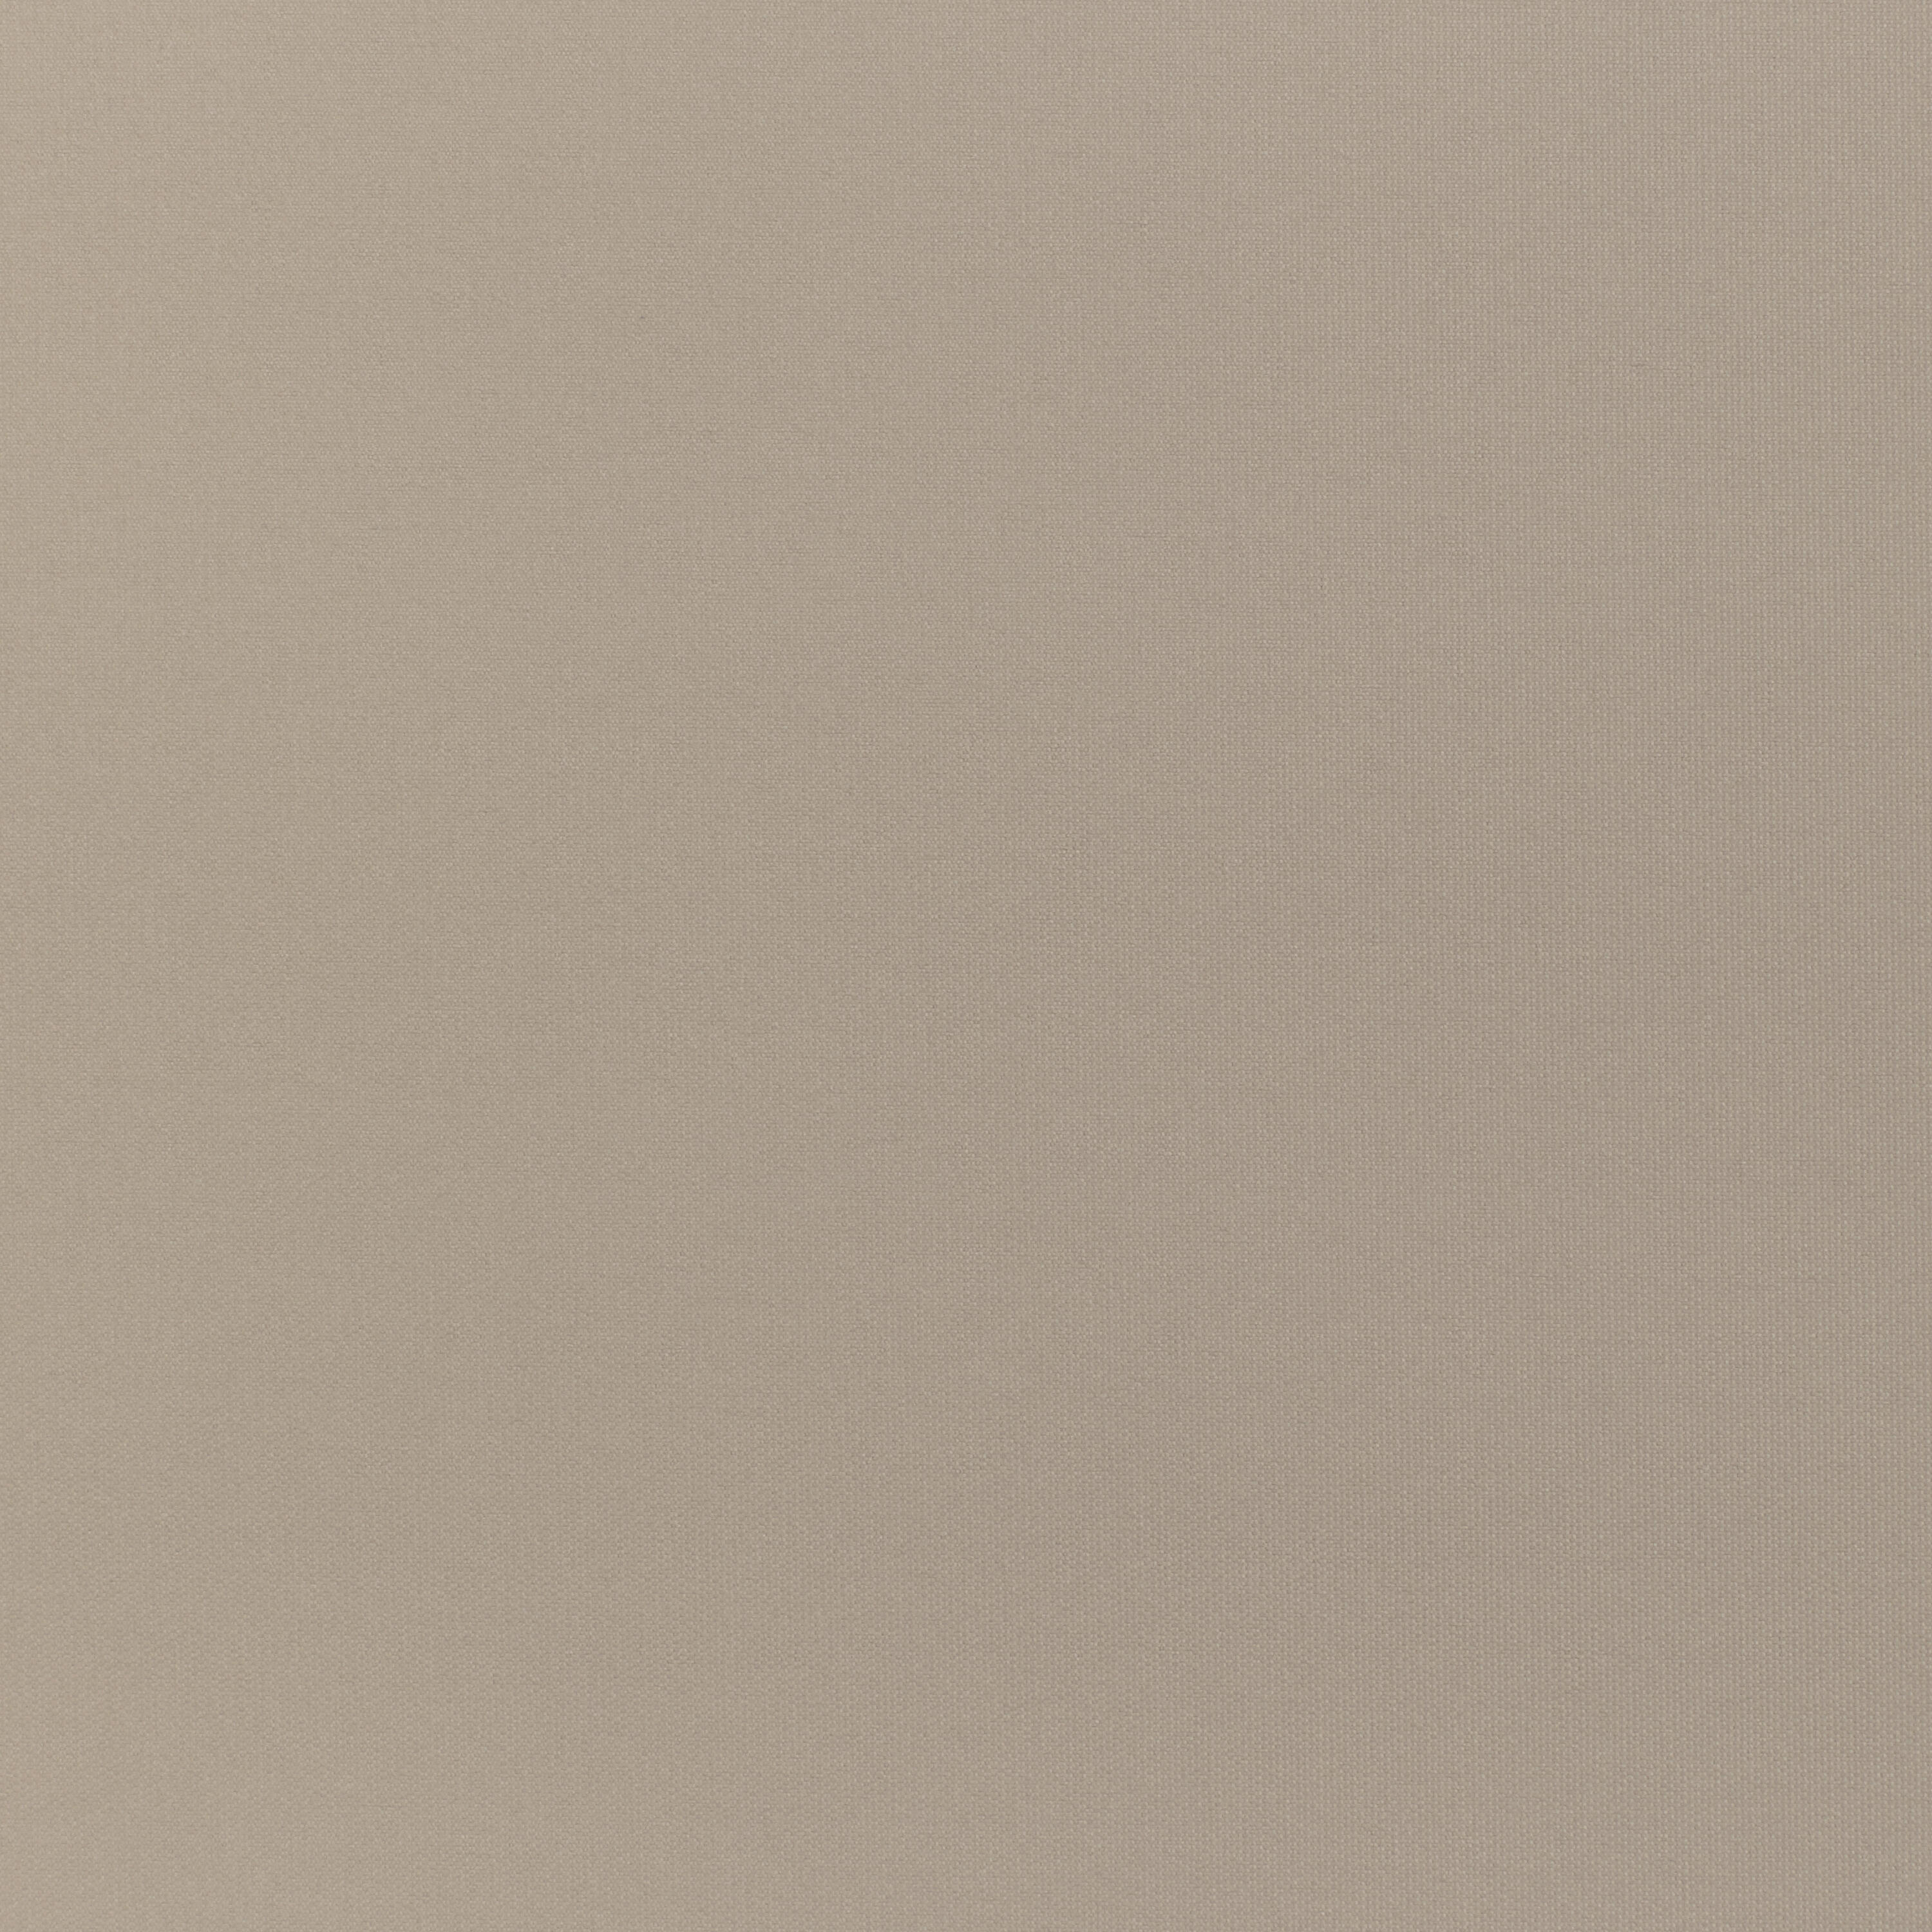 Tenda a rullo oscurante INSPIRE Tokyo beige 150 x 250 cm - 1